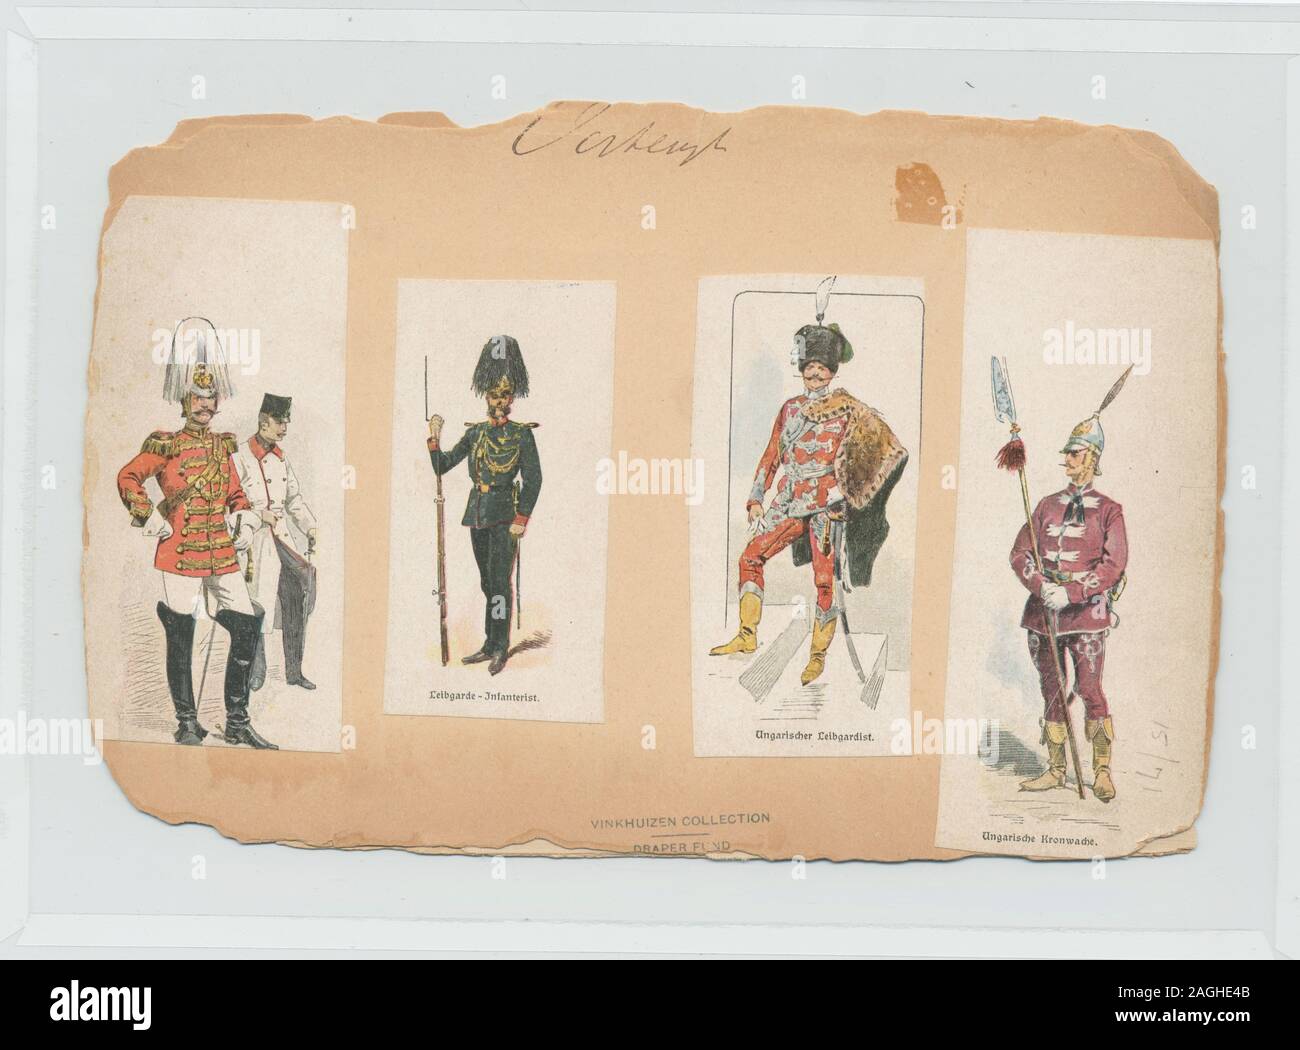 Ownership : Draper Fund Household bodyguards, c. 1900 (from periodical); Leibgarde-Infanterist; Ungarischer Leibgardist; Ungarische Kronwache Stock Photo